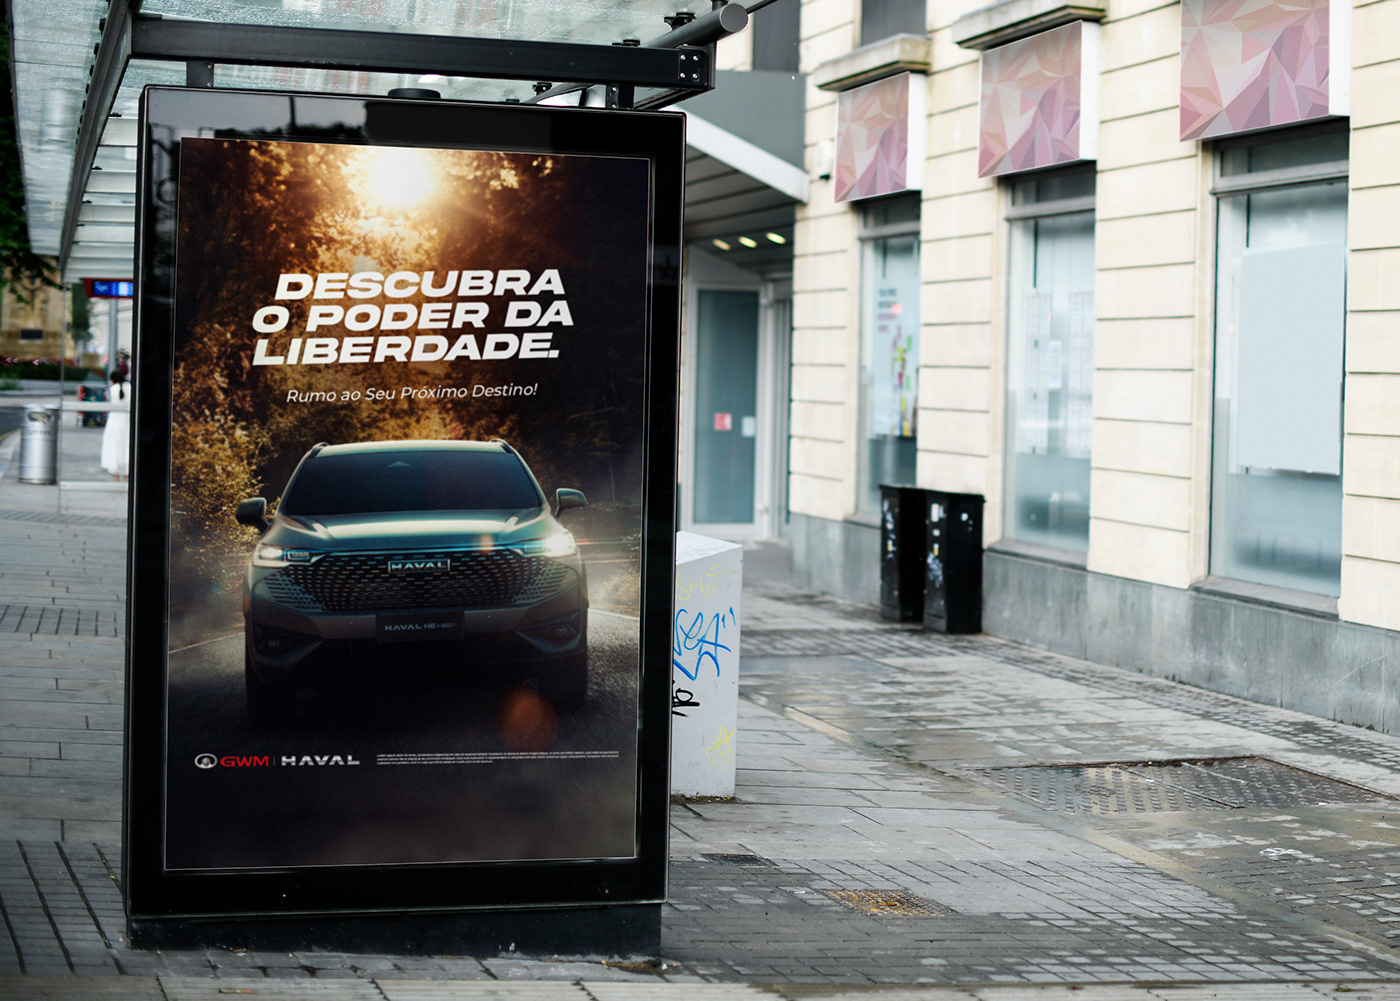 design Graphic Designer automotive   car Advertising  marketing   Vehicle automobile publicidad haval